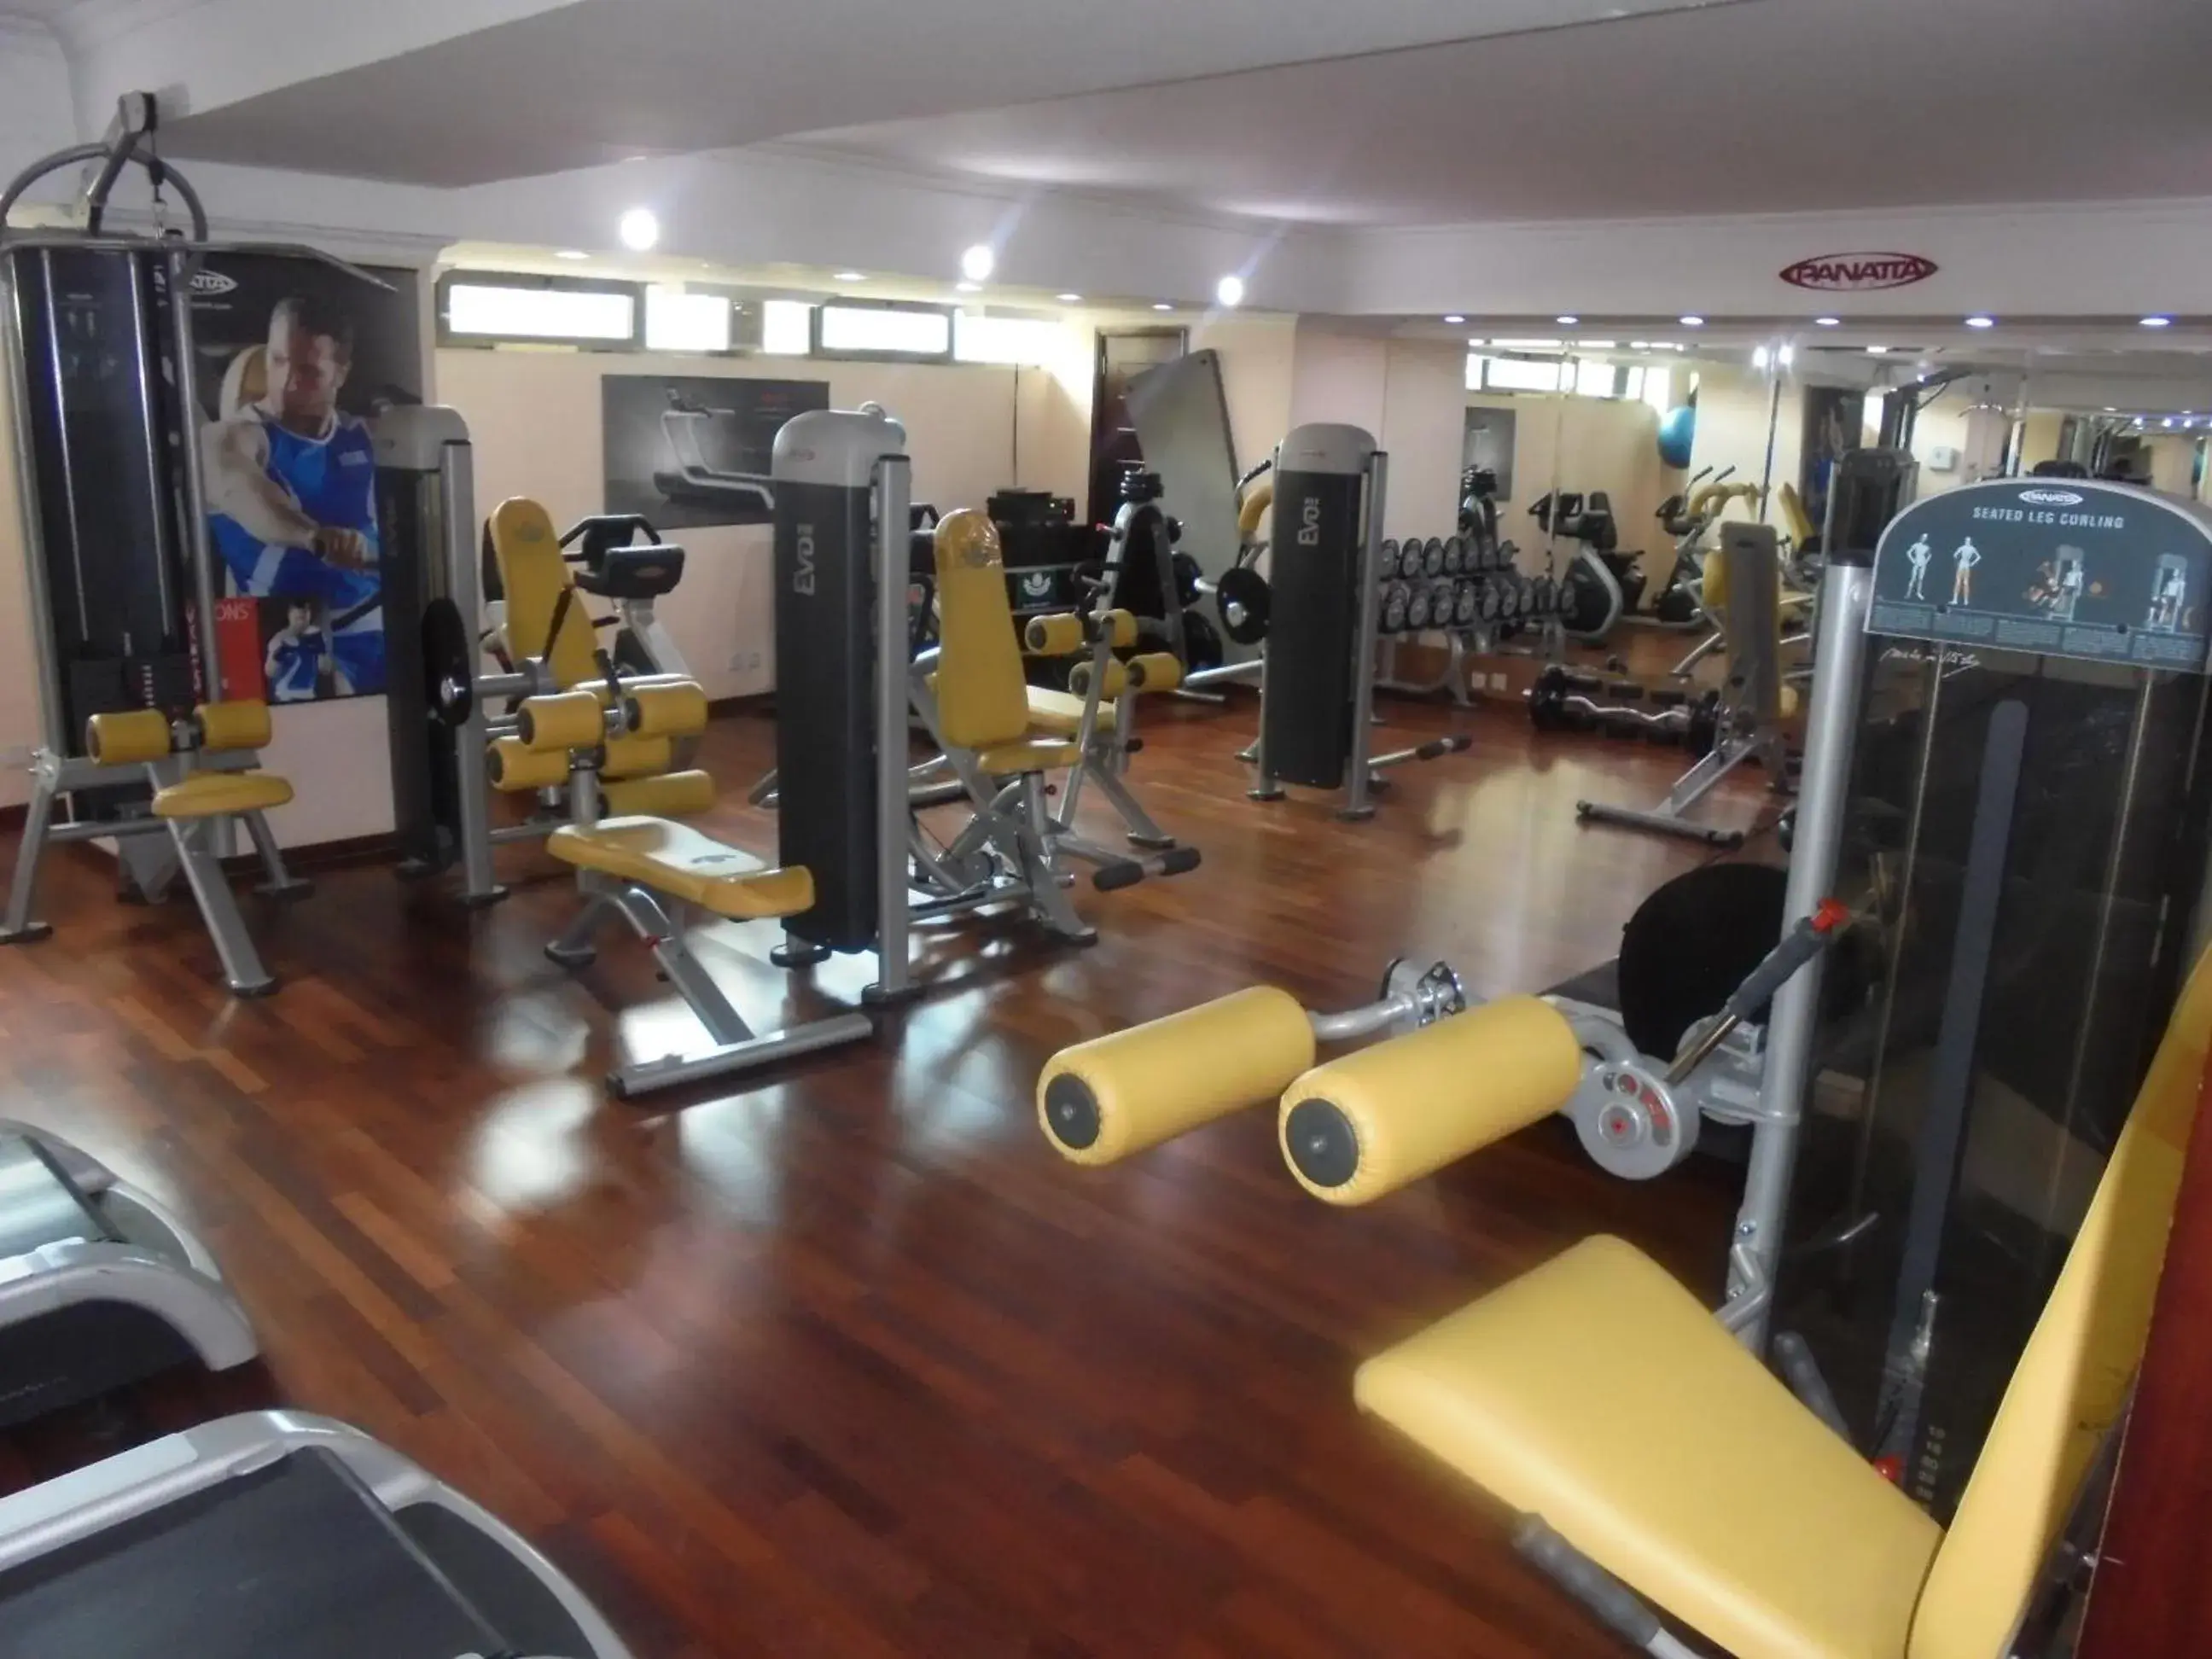 Fitness centre/facilities, Fitness Center/Facilities in Saro-Maria Hotel